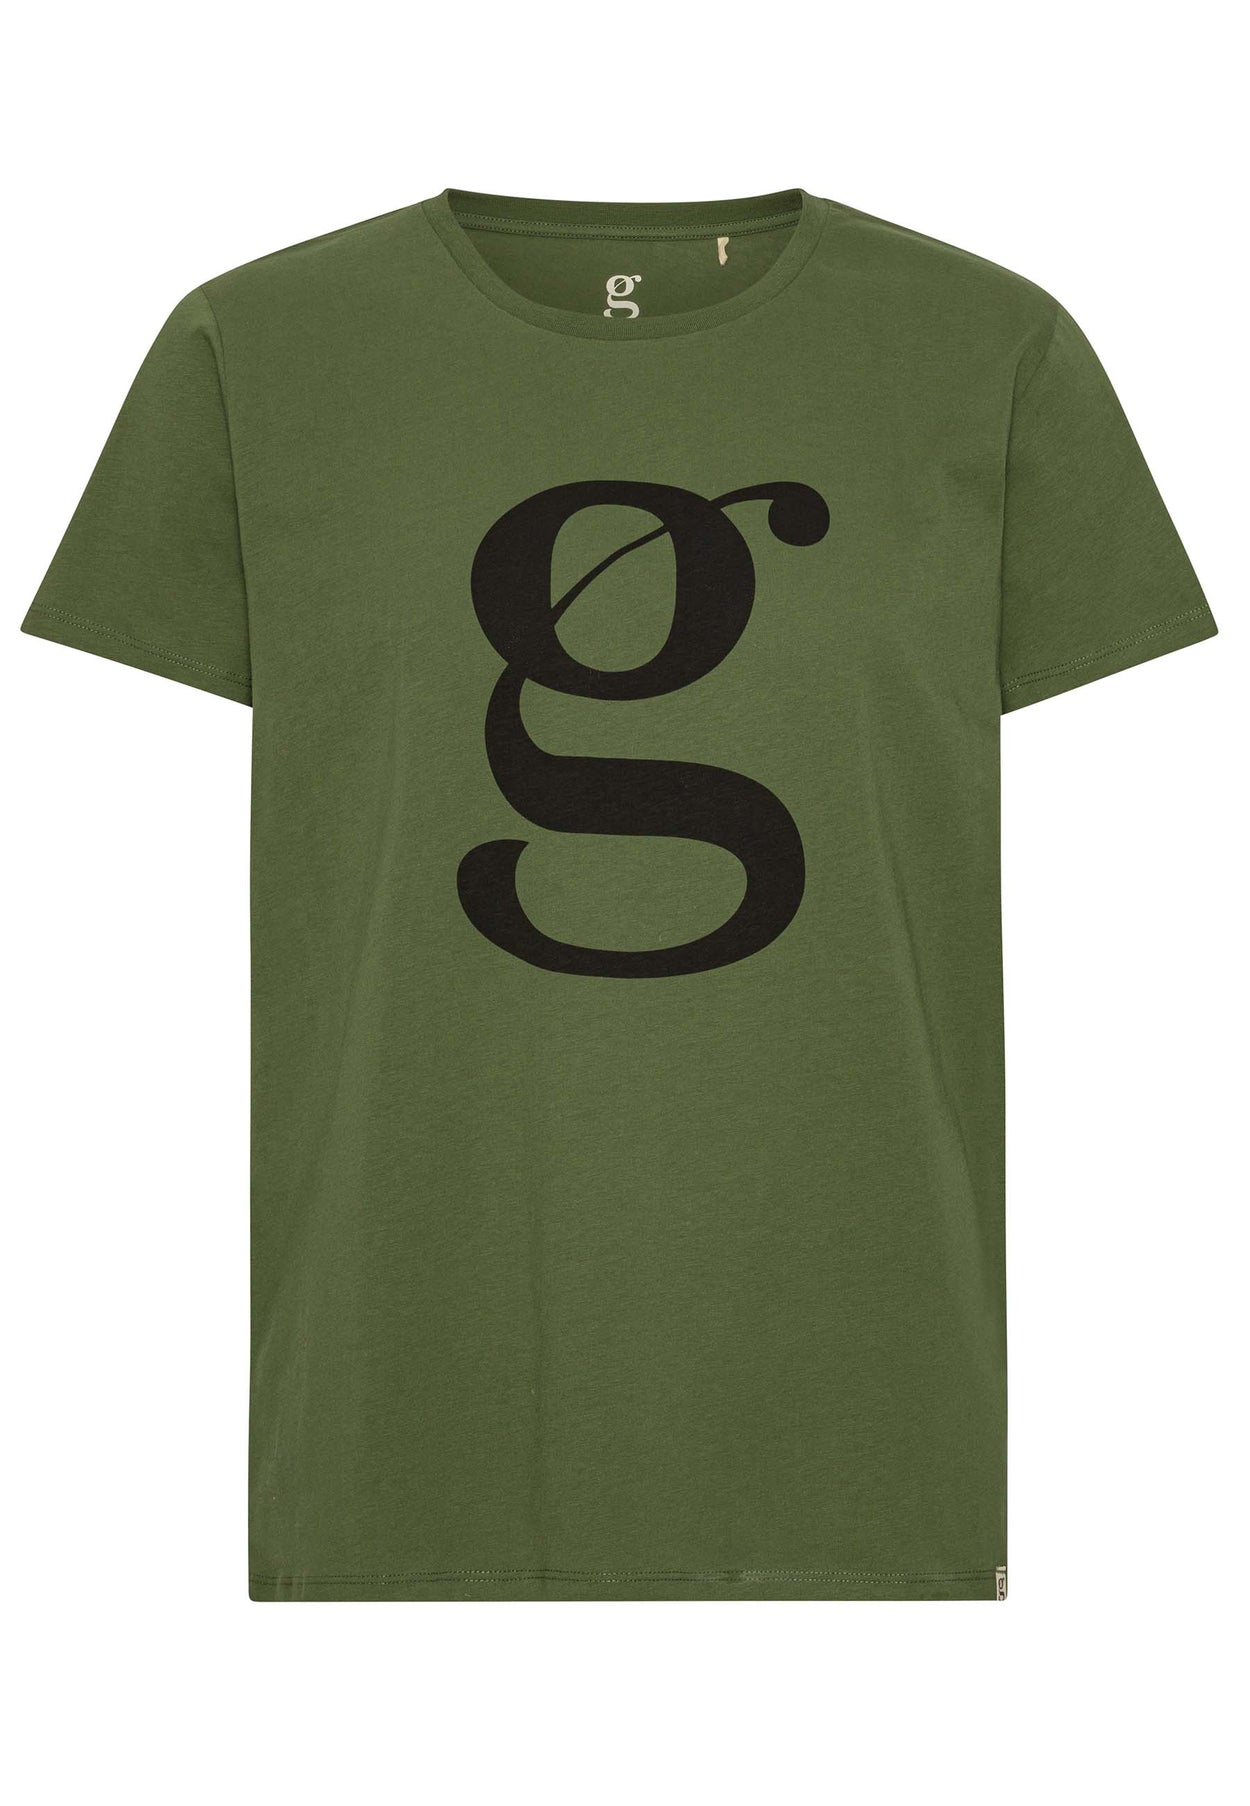 GROBUND Alfie t-shirten - den i mosgrøn med logo